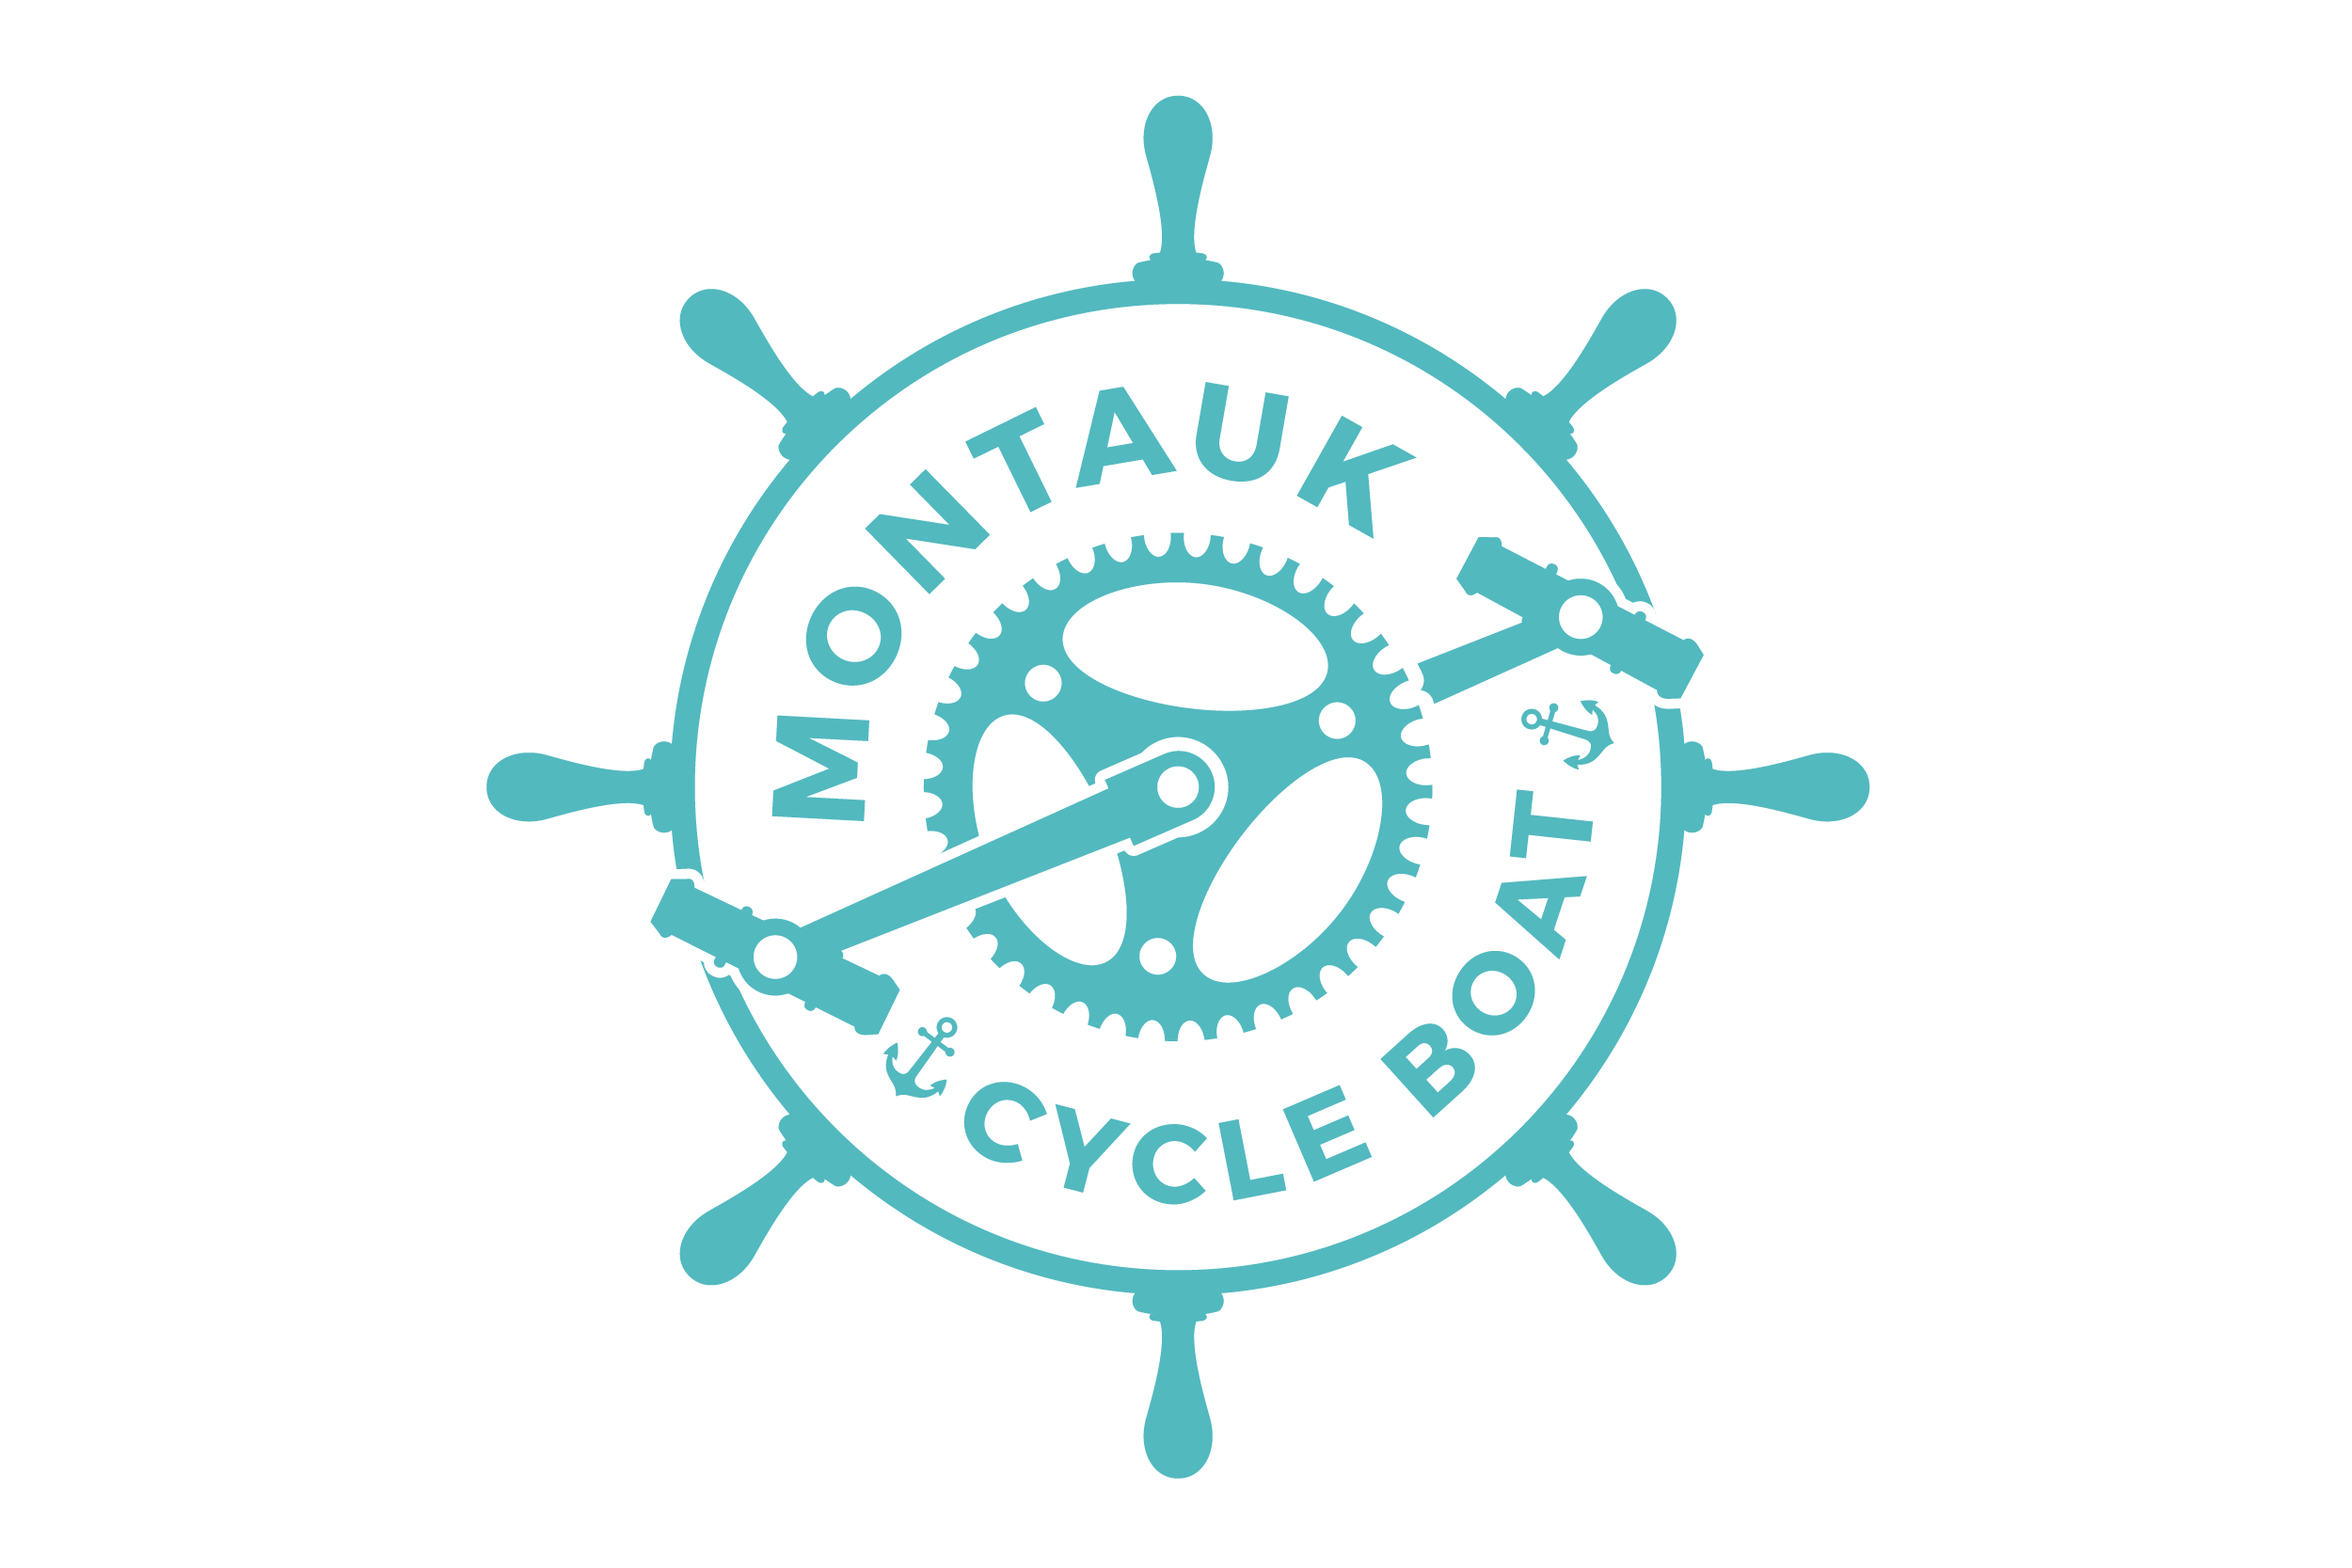 MONTAUK CYCLE BOAT